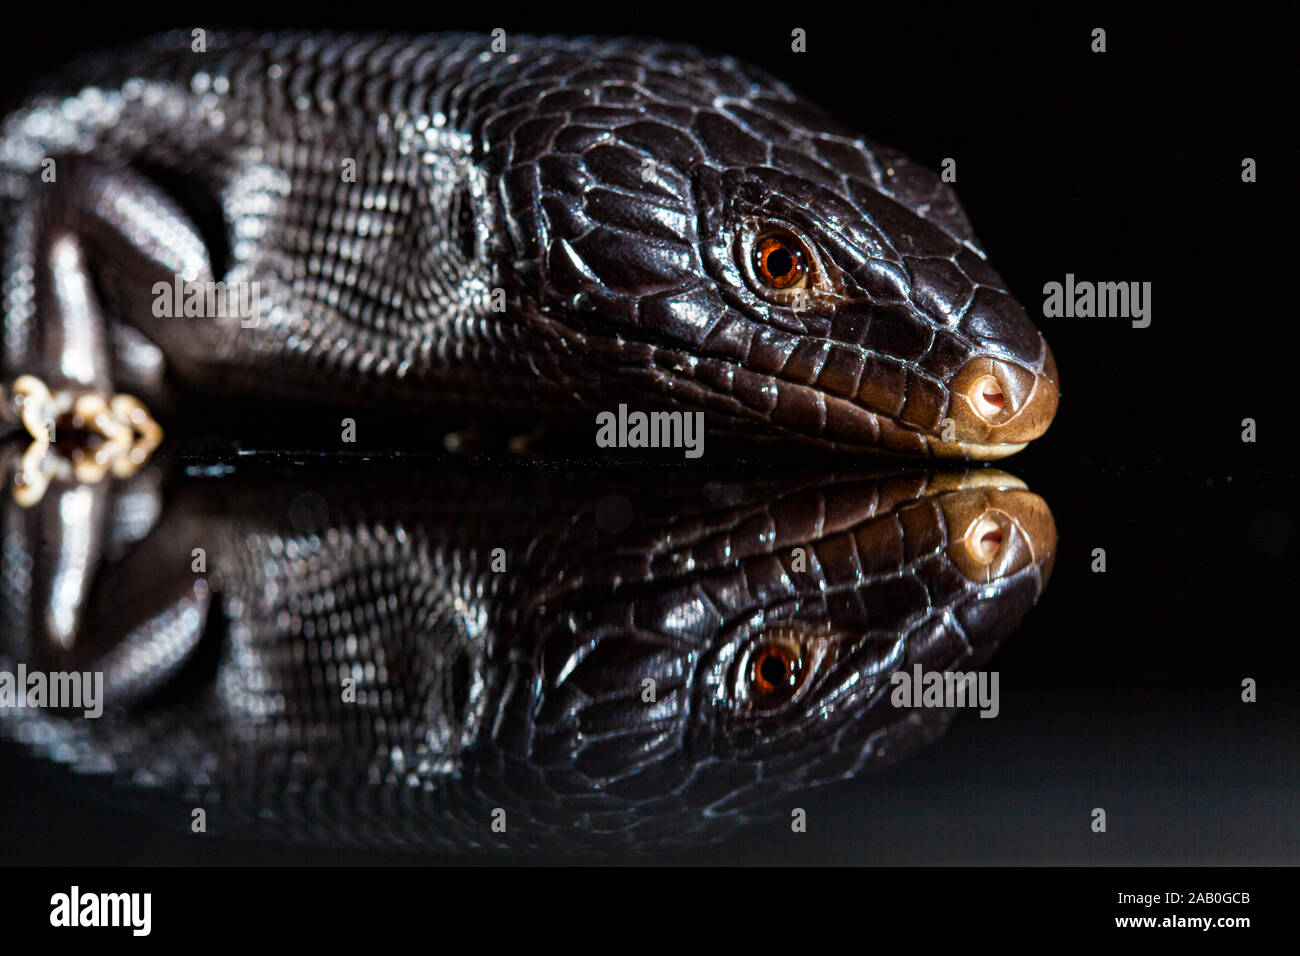 Black blue tongued lizard in dark shiny mirror environement. Stock Photo